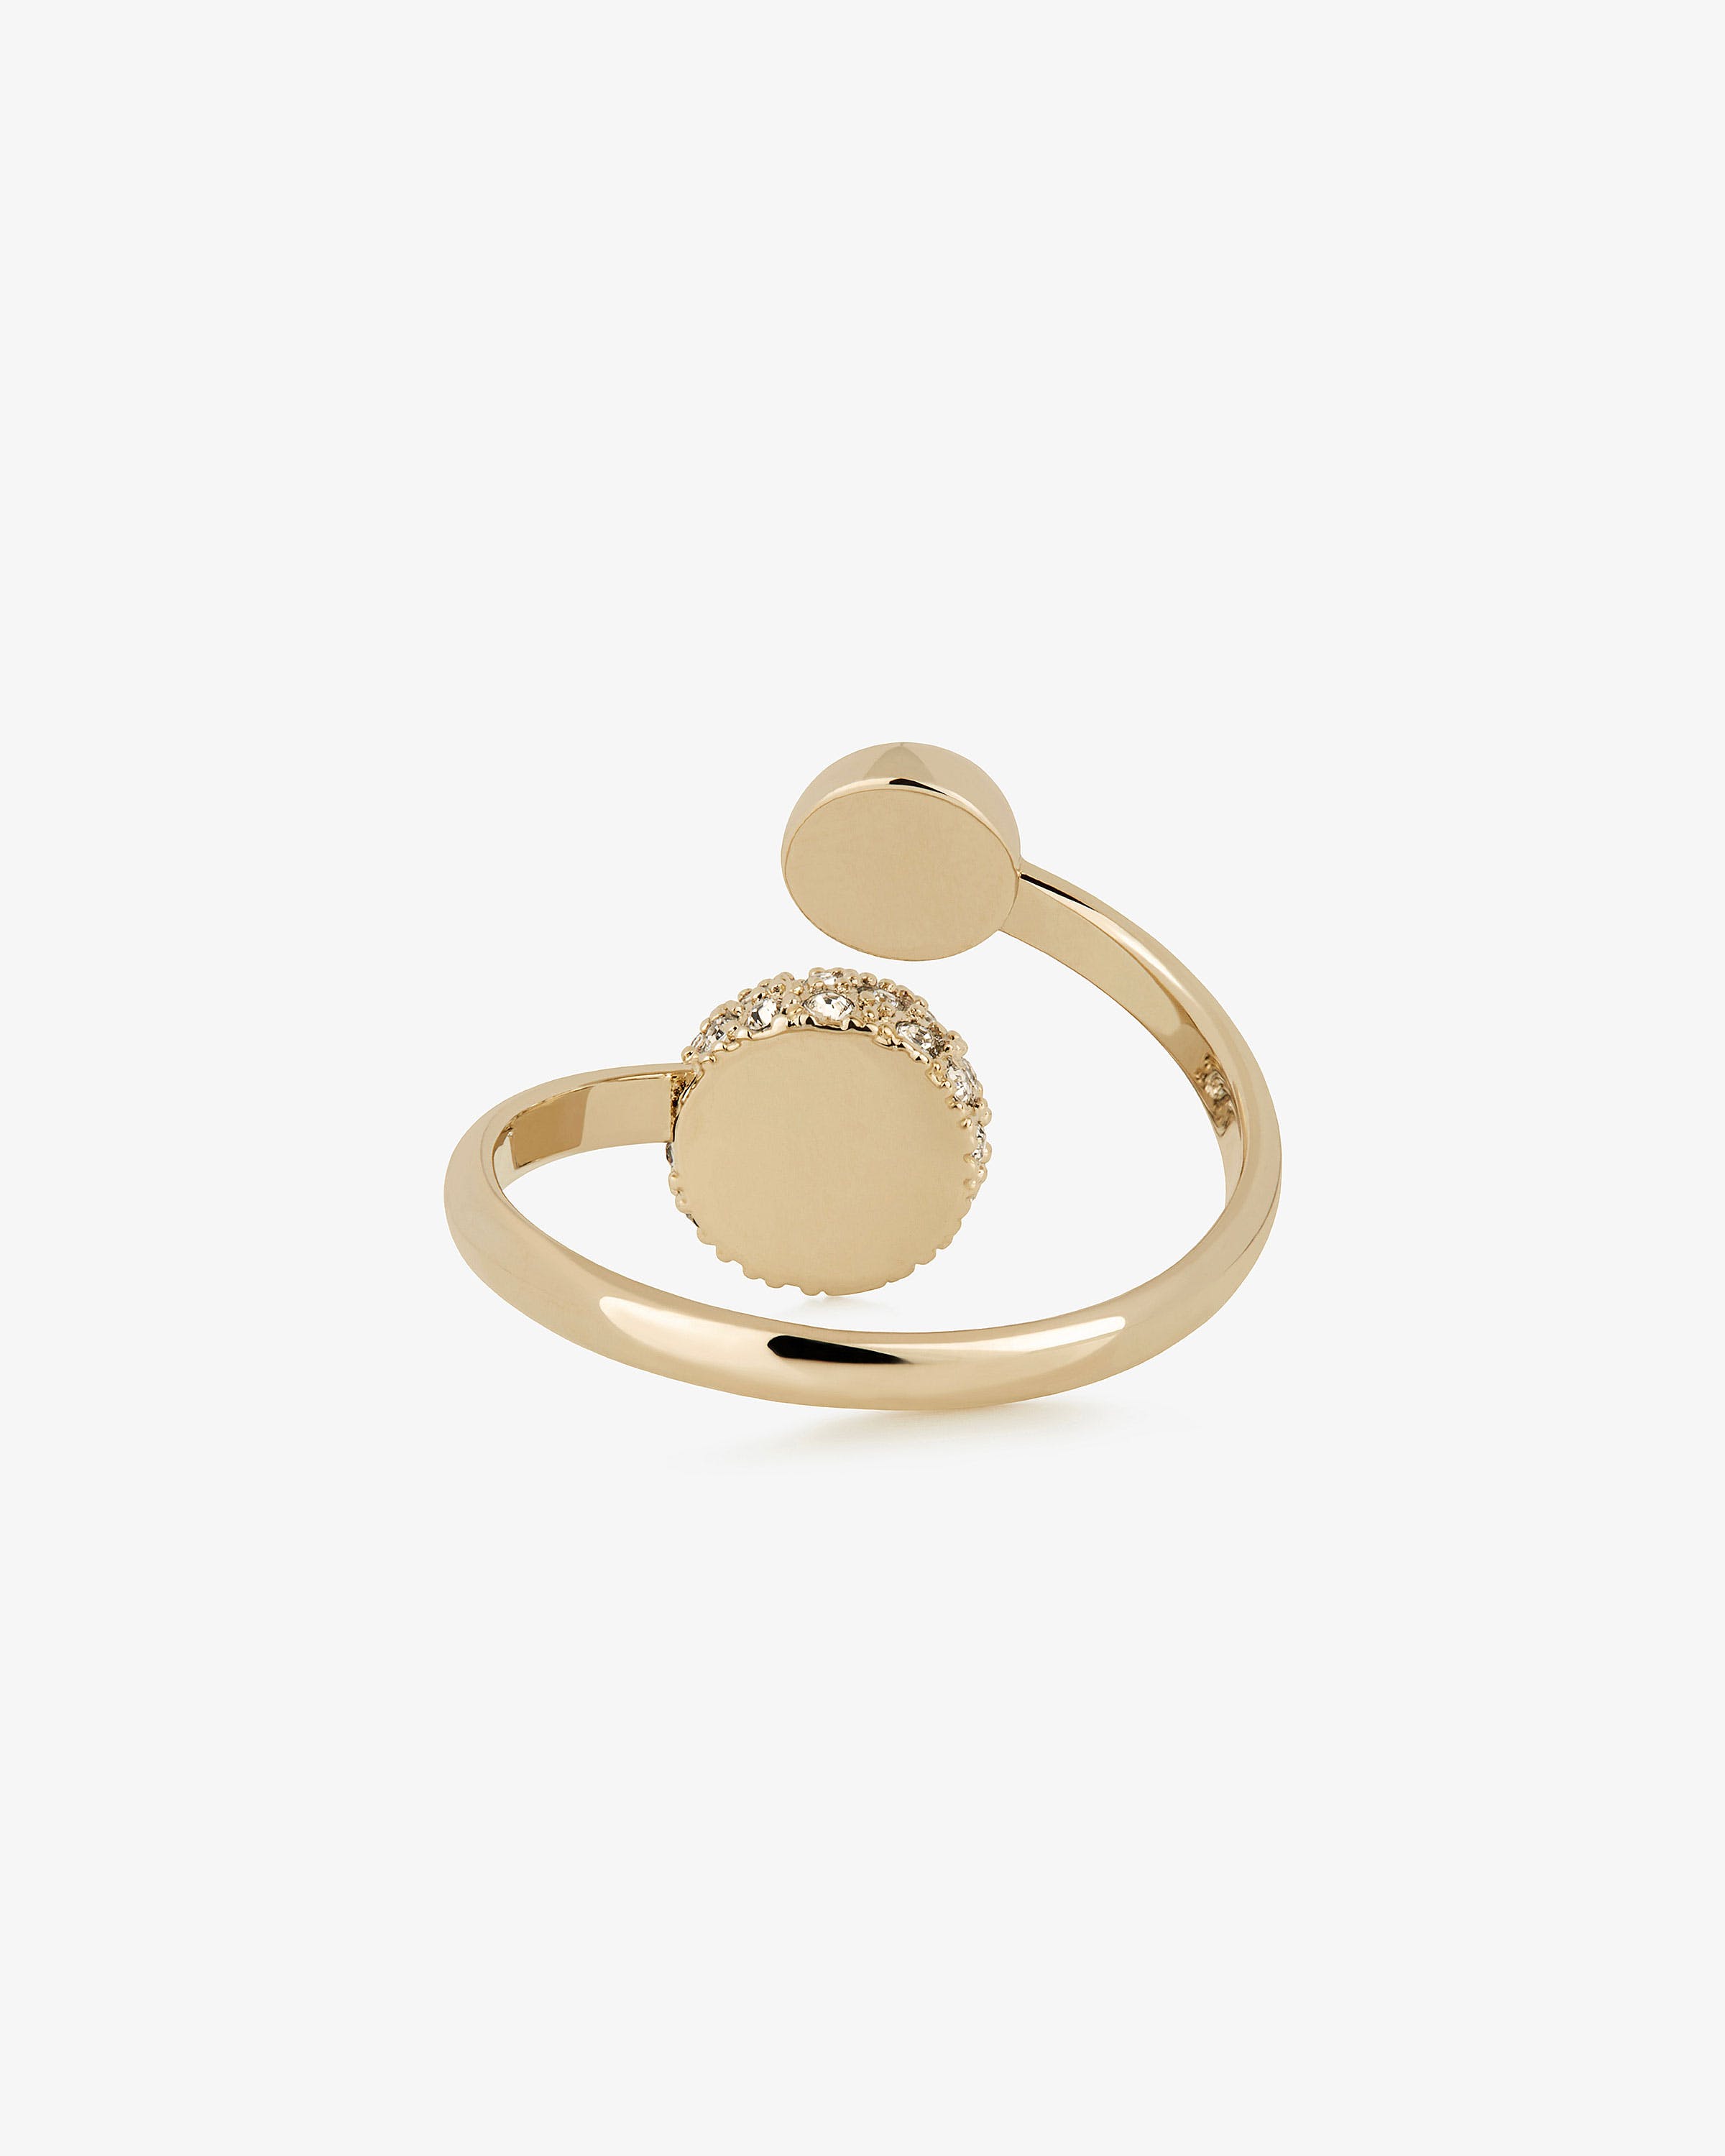 Strathberry - Crescent Ring - Gold | Strathberry